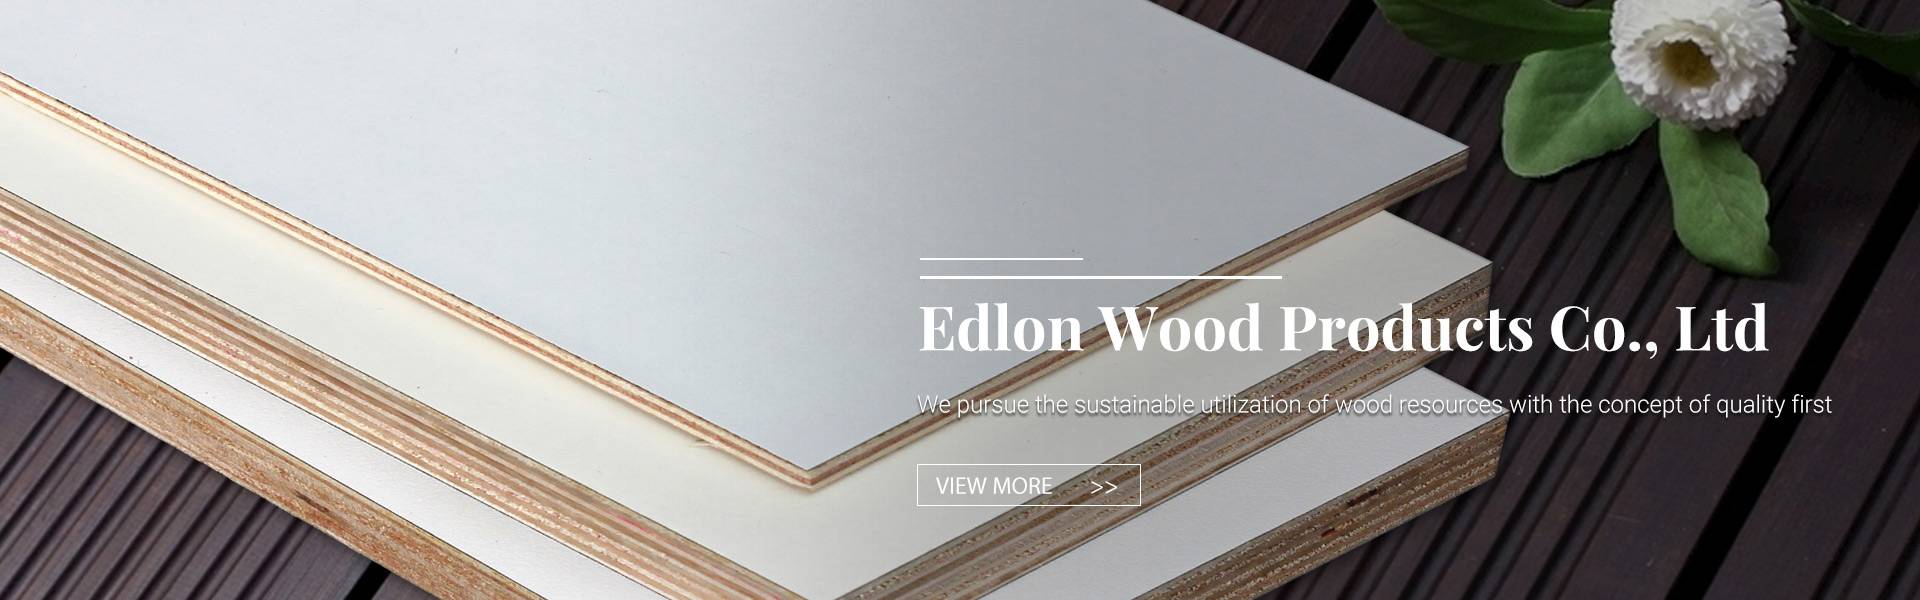 Edlon Wood Products Co., Ltd.